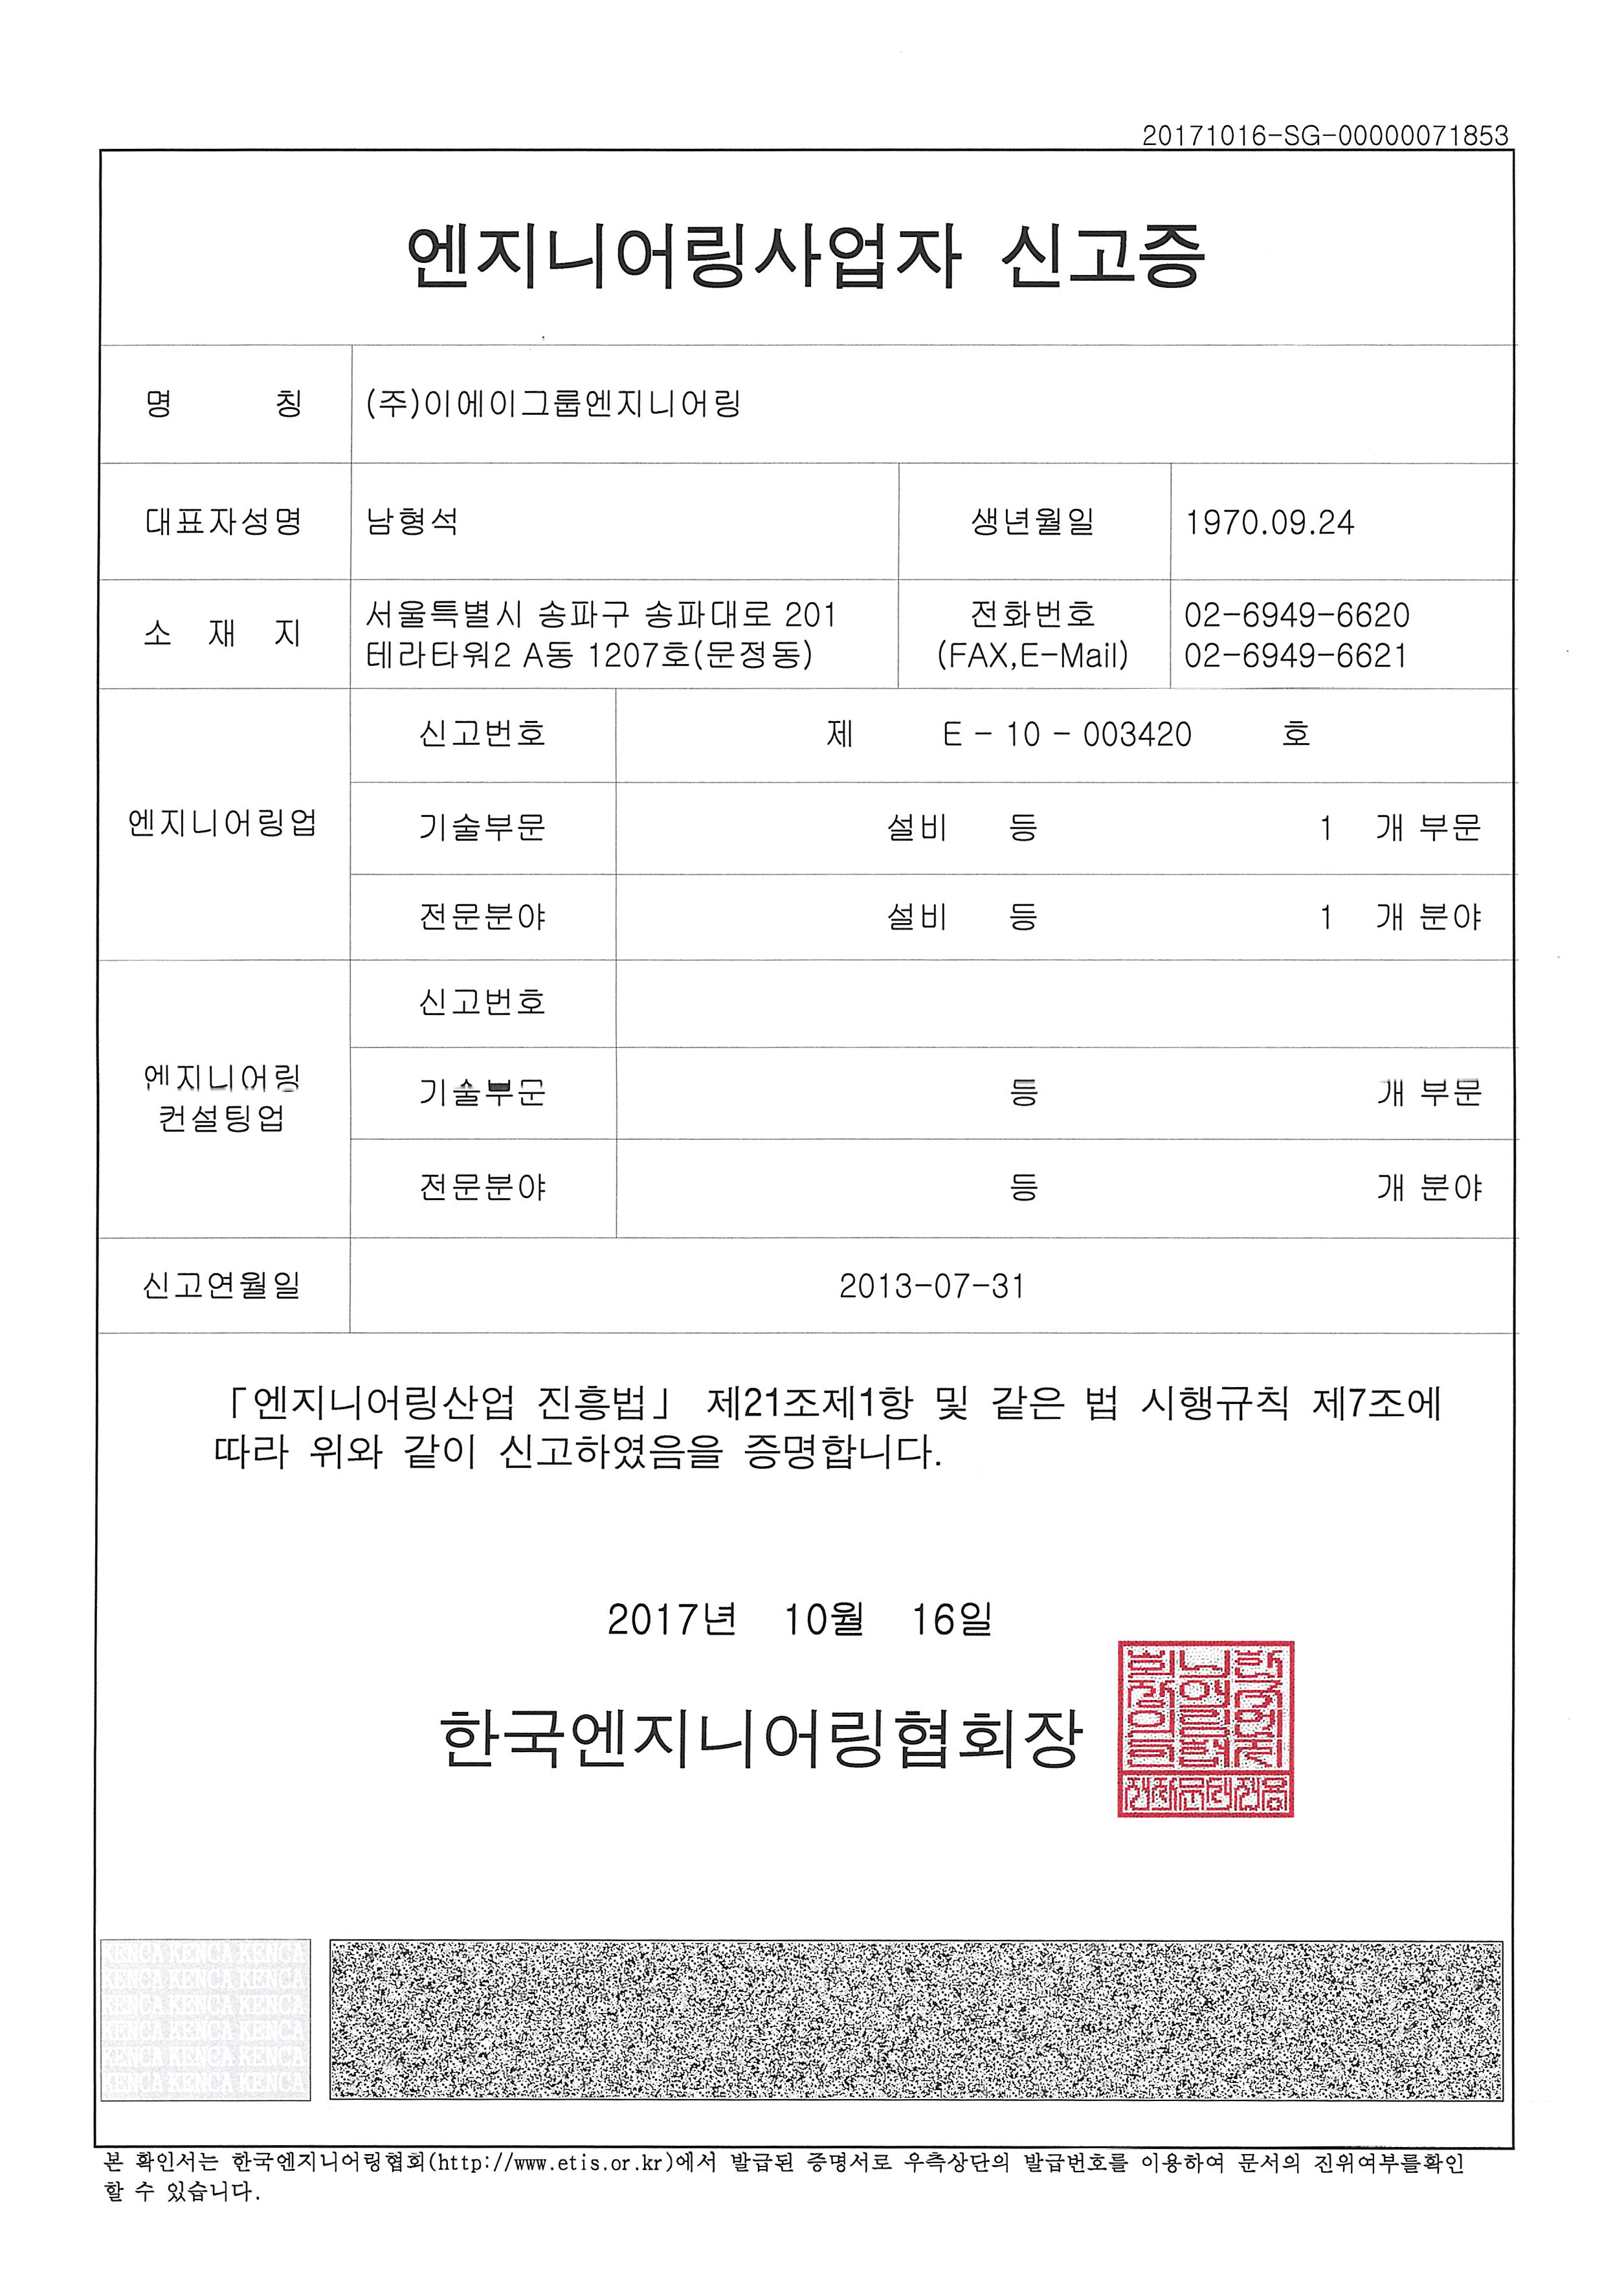 License-&-Certification_02